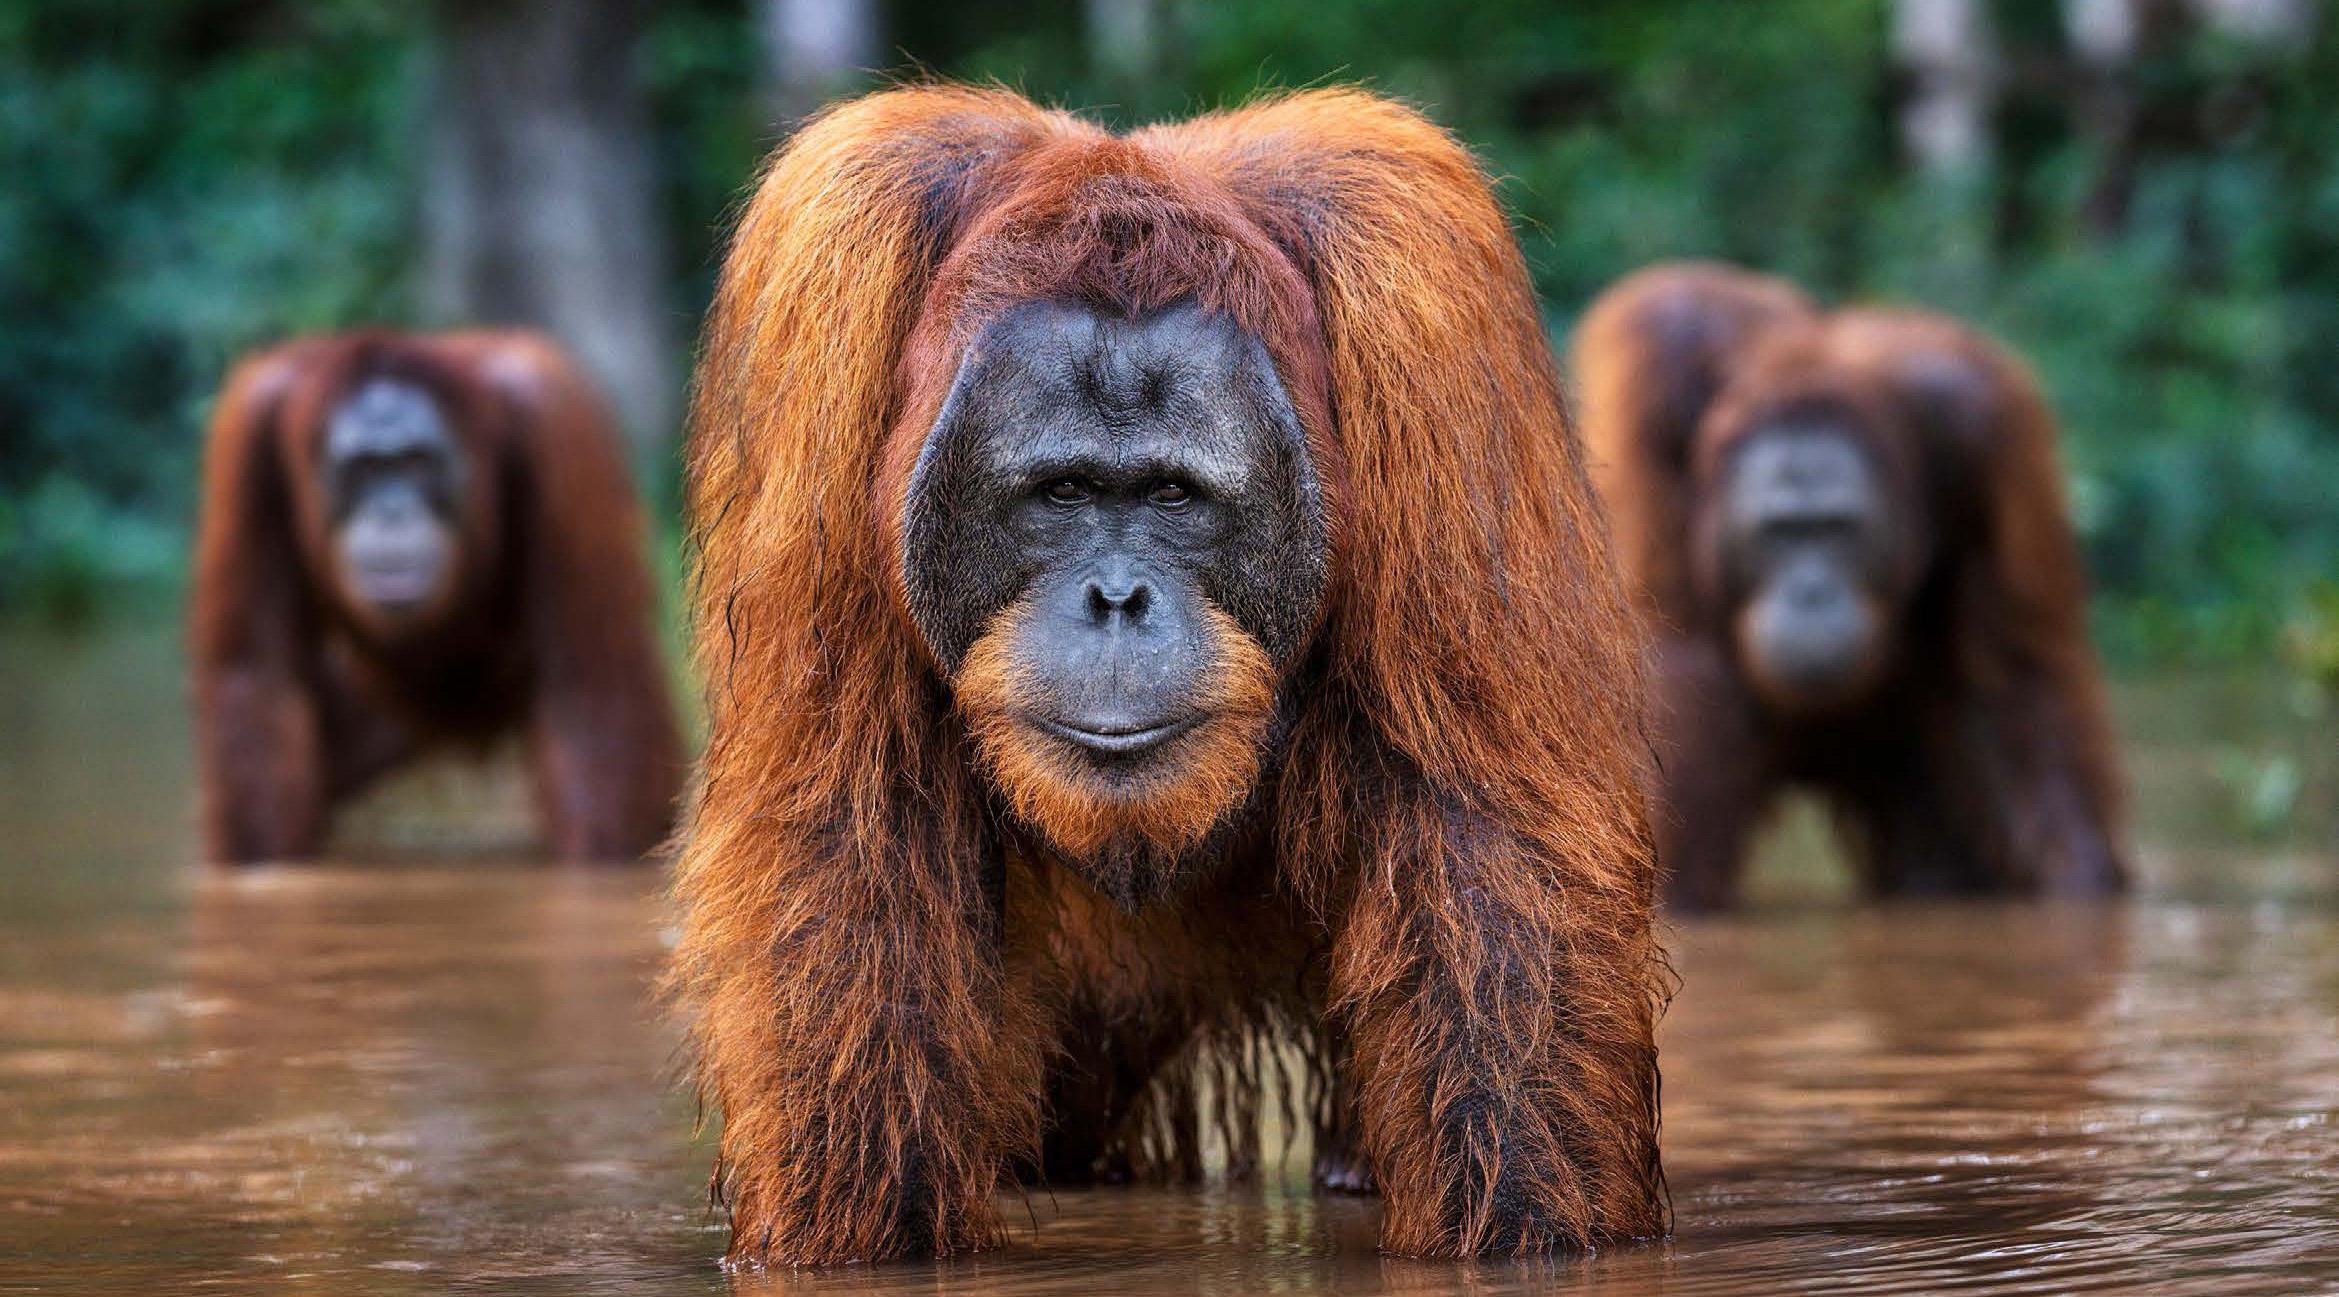 David Yarrow Color Photograph - Welcome to the Jungle - Contemporary Photography - Orangutan